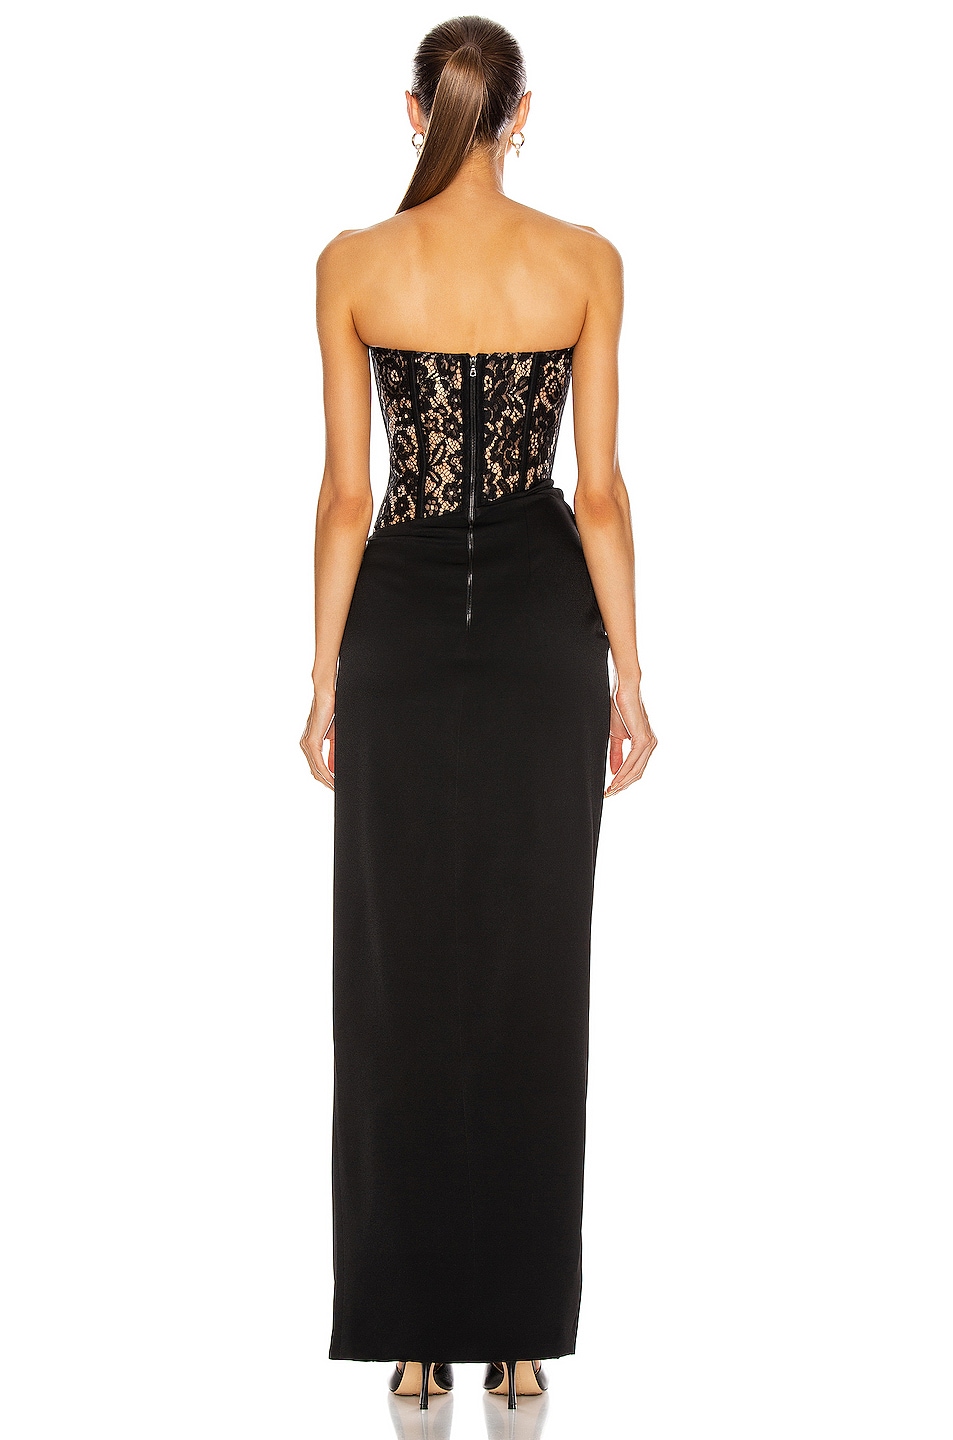 RASARIO Asymmetric Lace Corset Gown in Black | FWRD